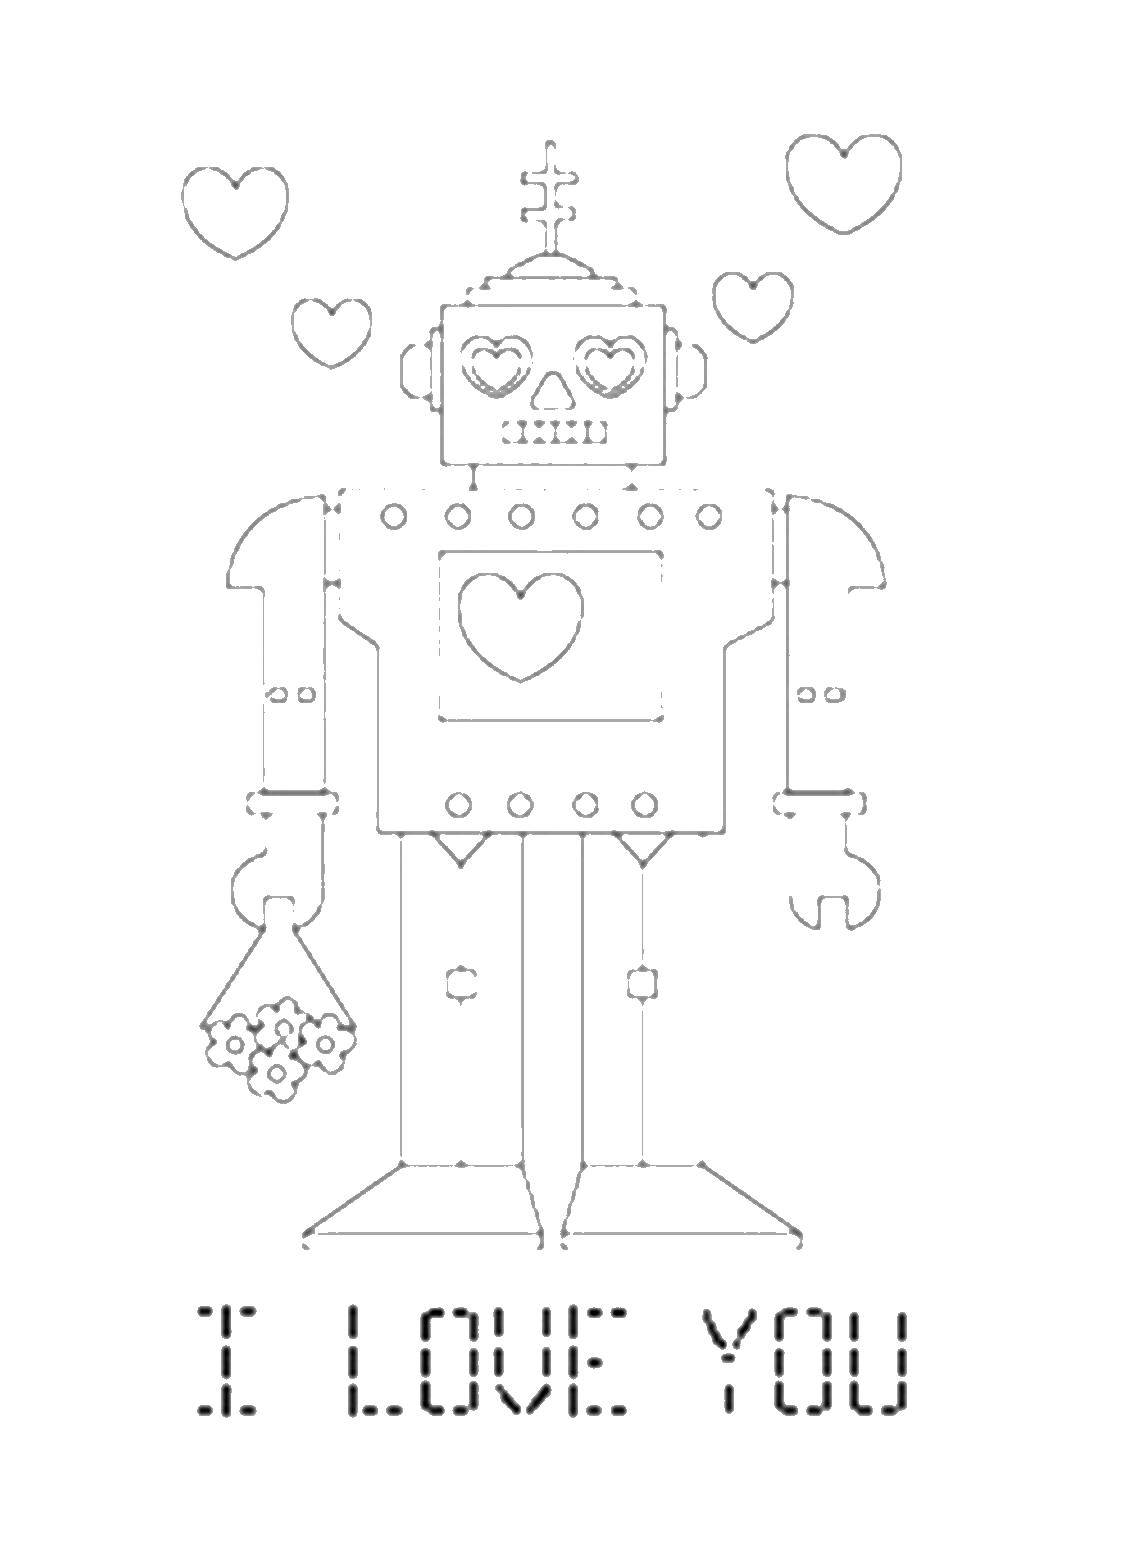 Название: Раскраска Робот, я люблю тебя. Категория: Я тебя люблю. Теги: я тебя люблю, робот, сердце.